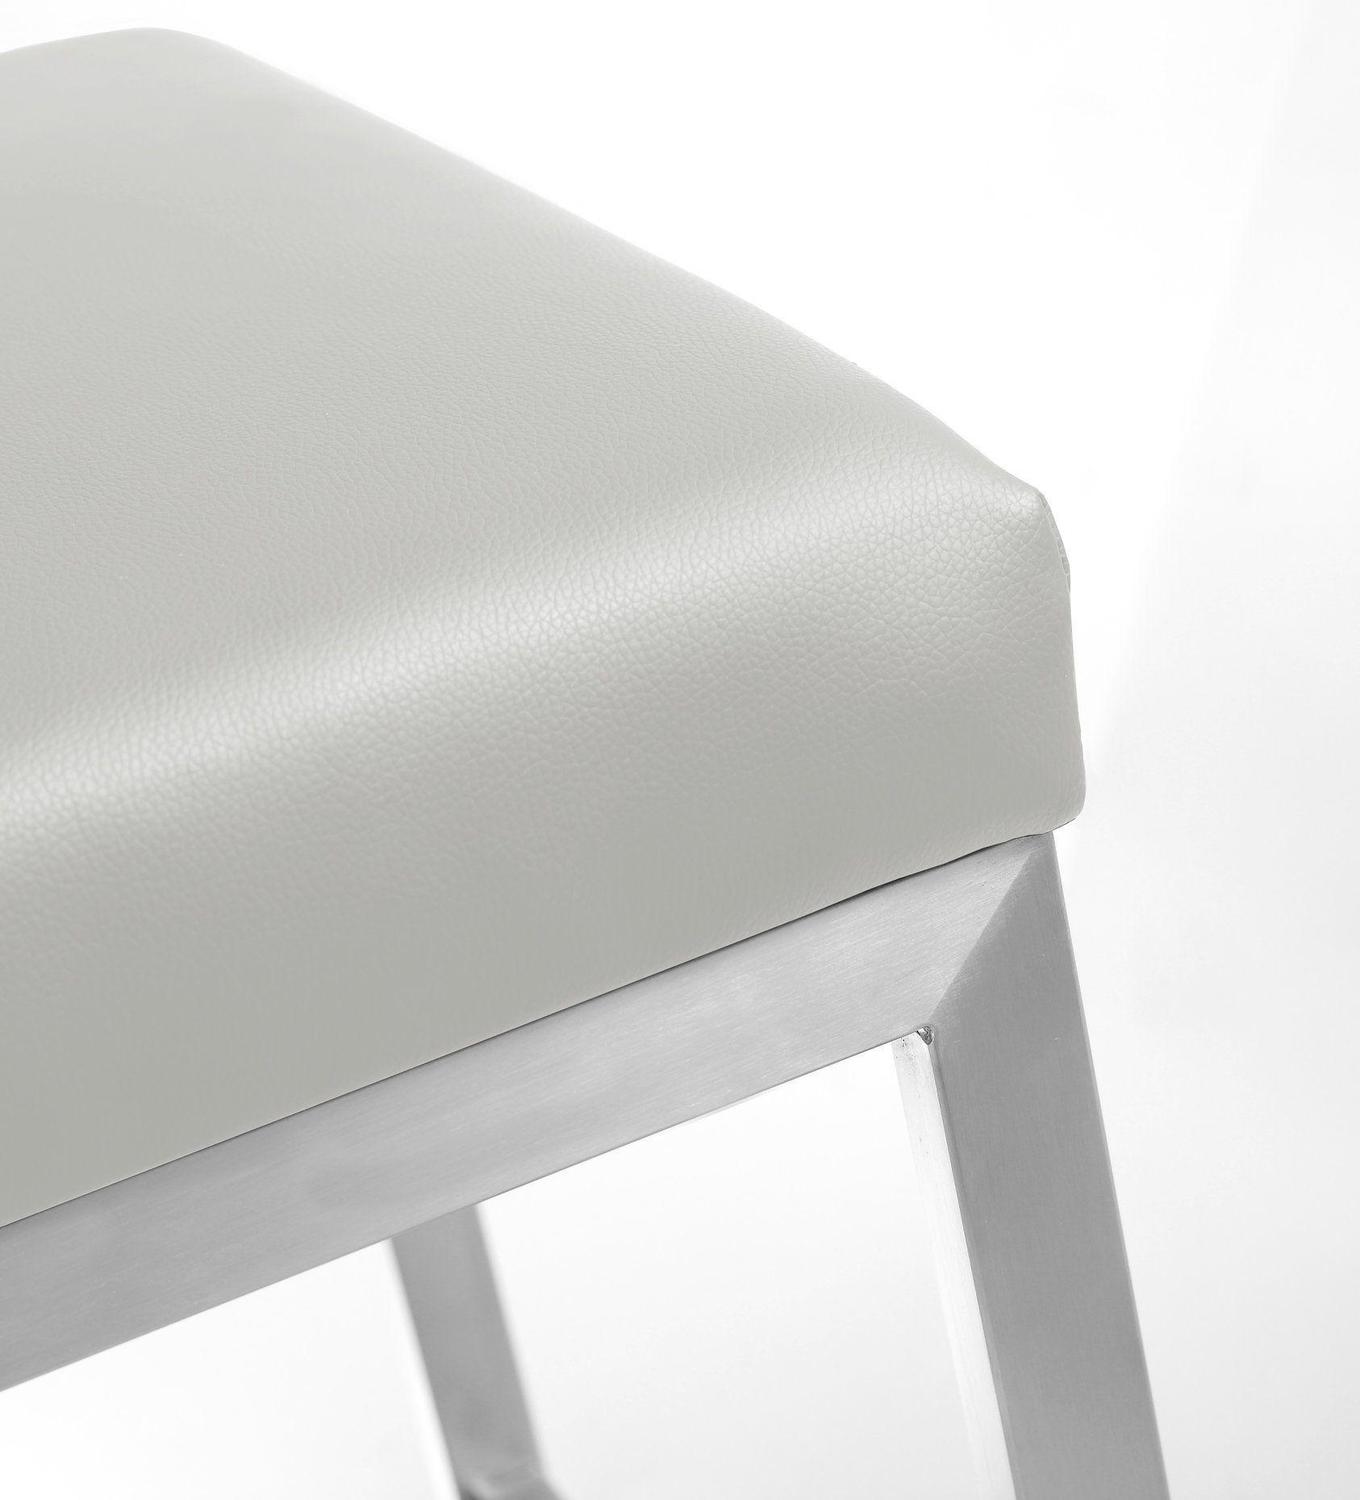 counter height bar stools set of 4 Tov Furniture Stools Light Grey